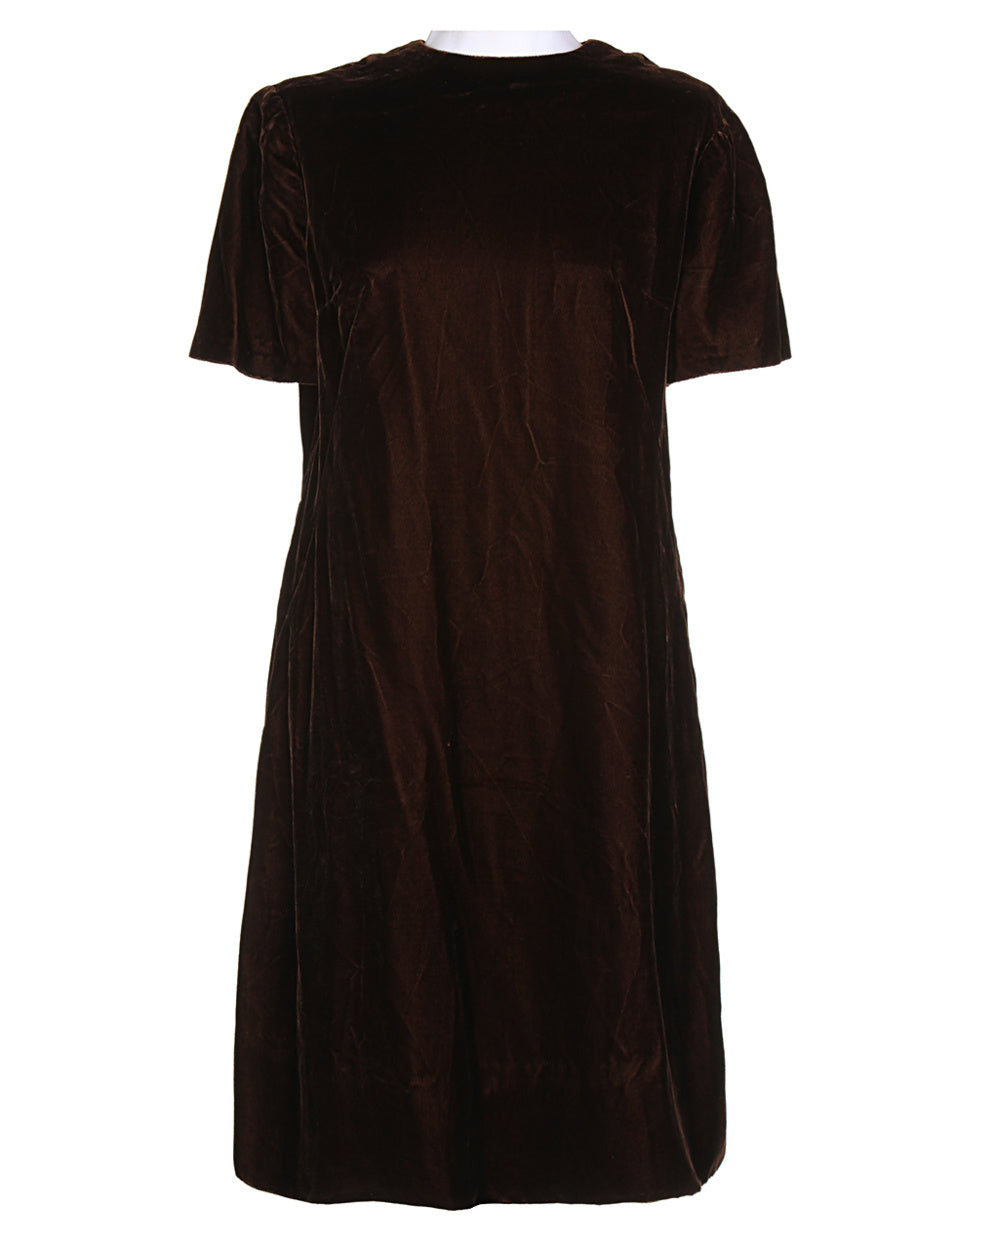 Vintage 60s Brown Short Sleeve Mini Dress – L